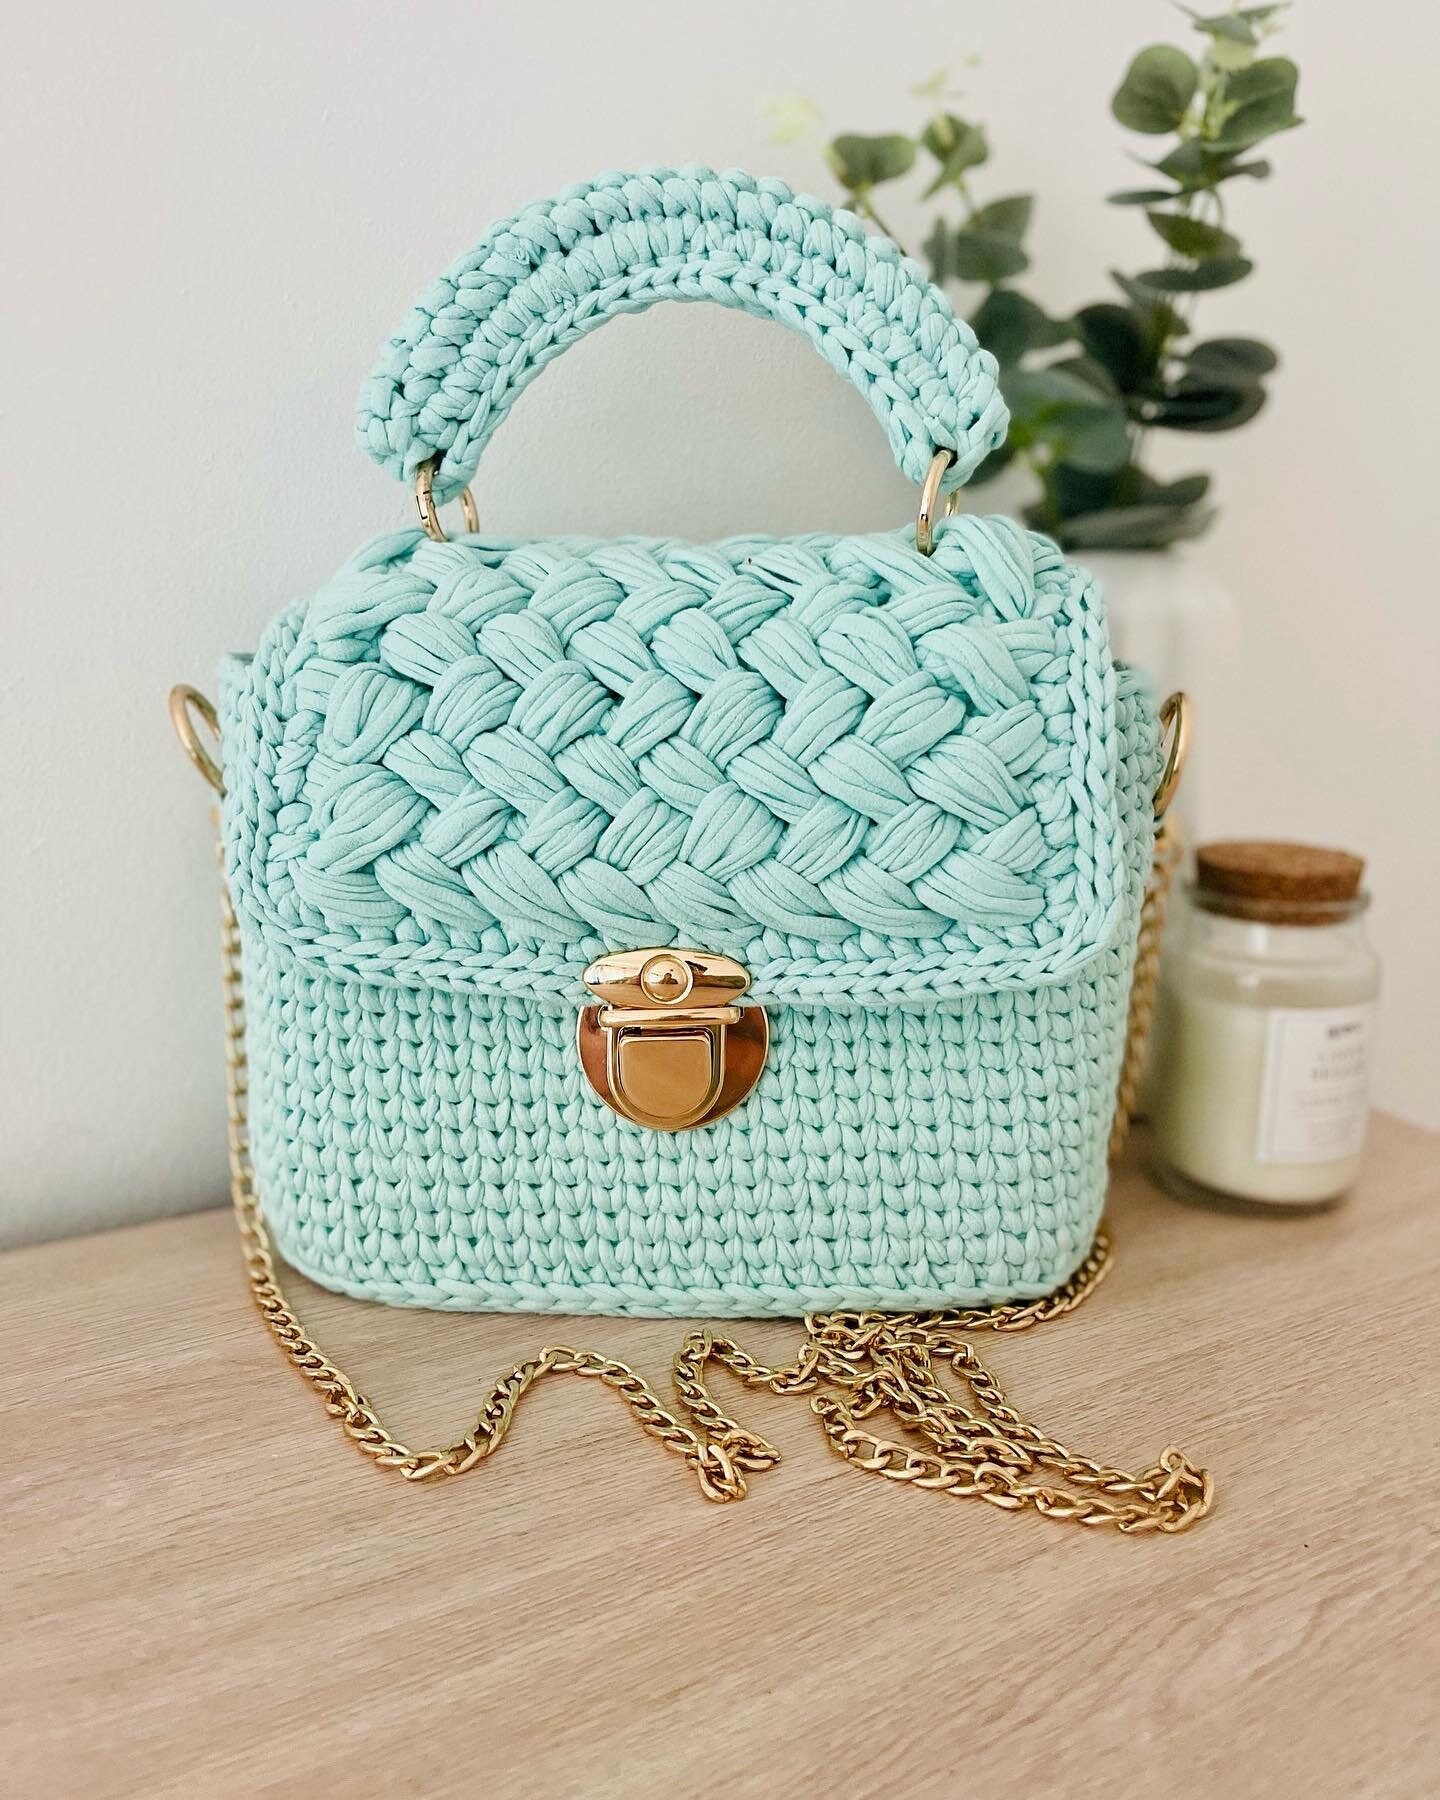 Crochet Bag Luxury Knit Shoulder Bag Gold Chain - Etsy